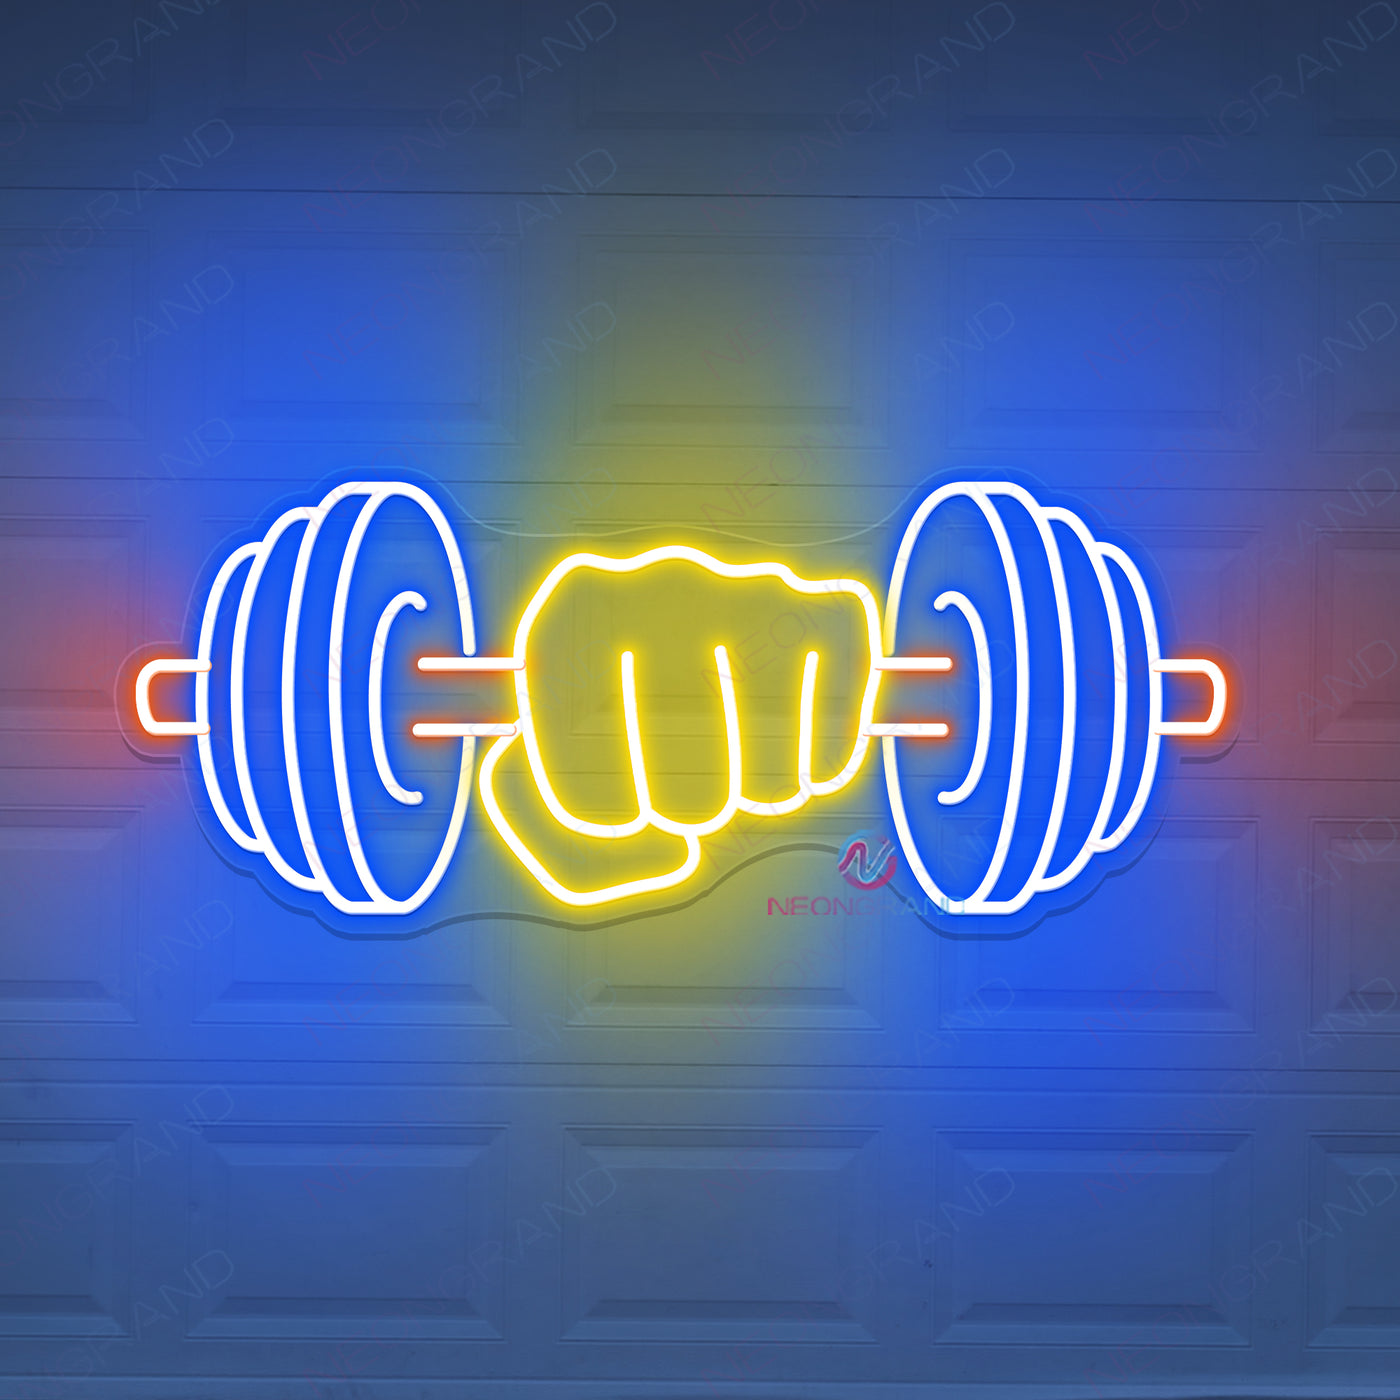 Neon Barbell Sign Led Light For Gym